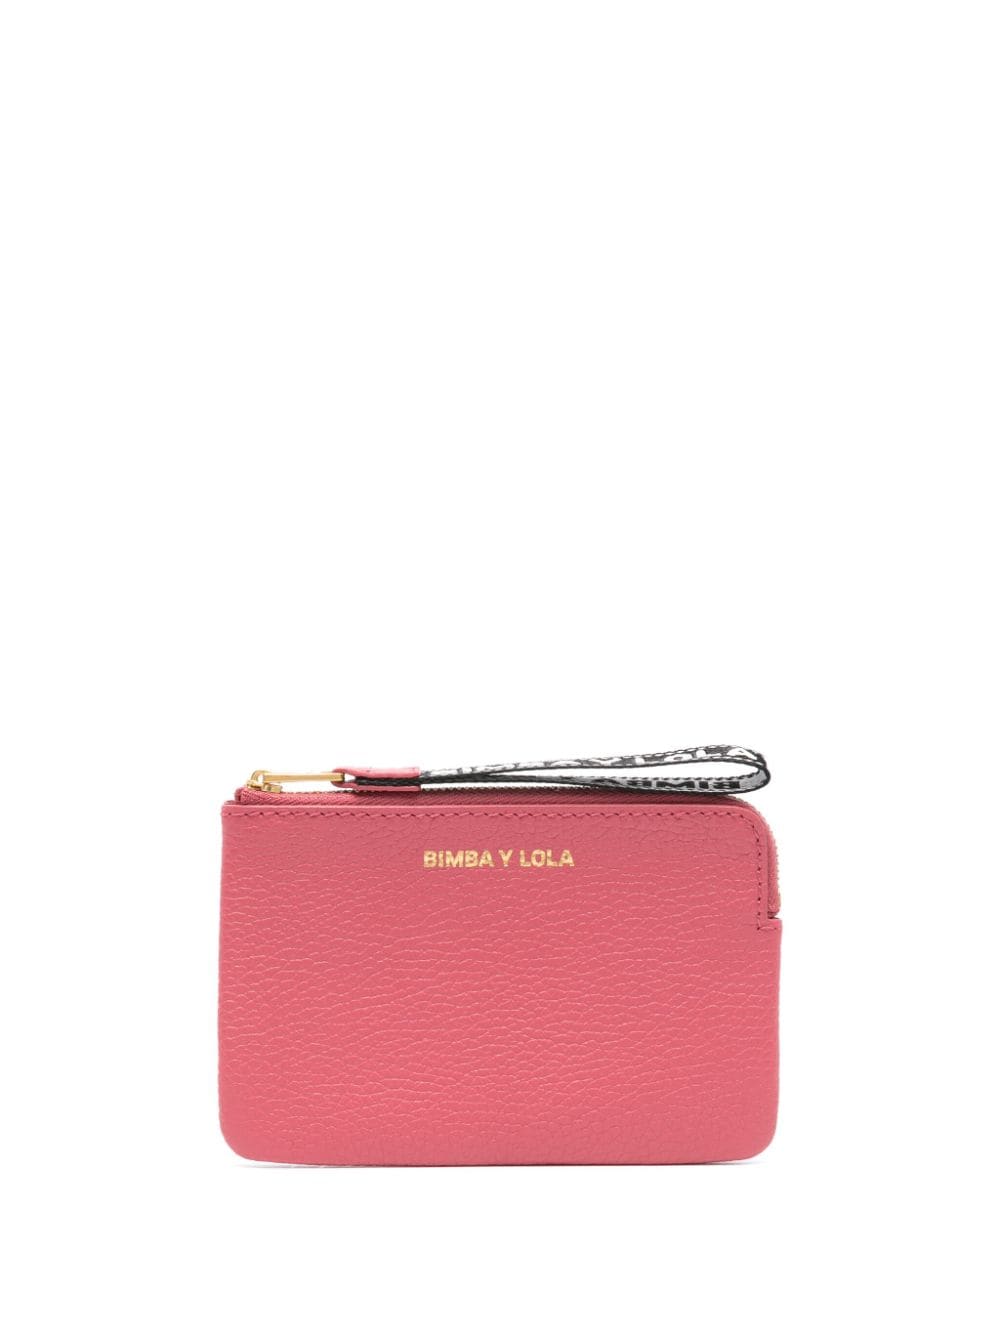 Bimba Y Lola Leather Wallet/Mini Bag